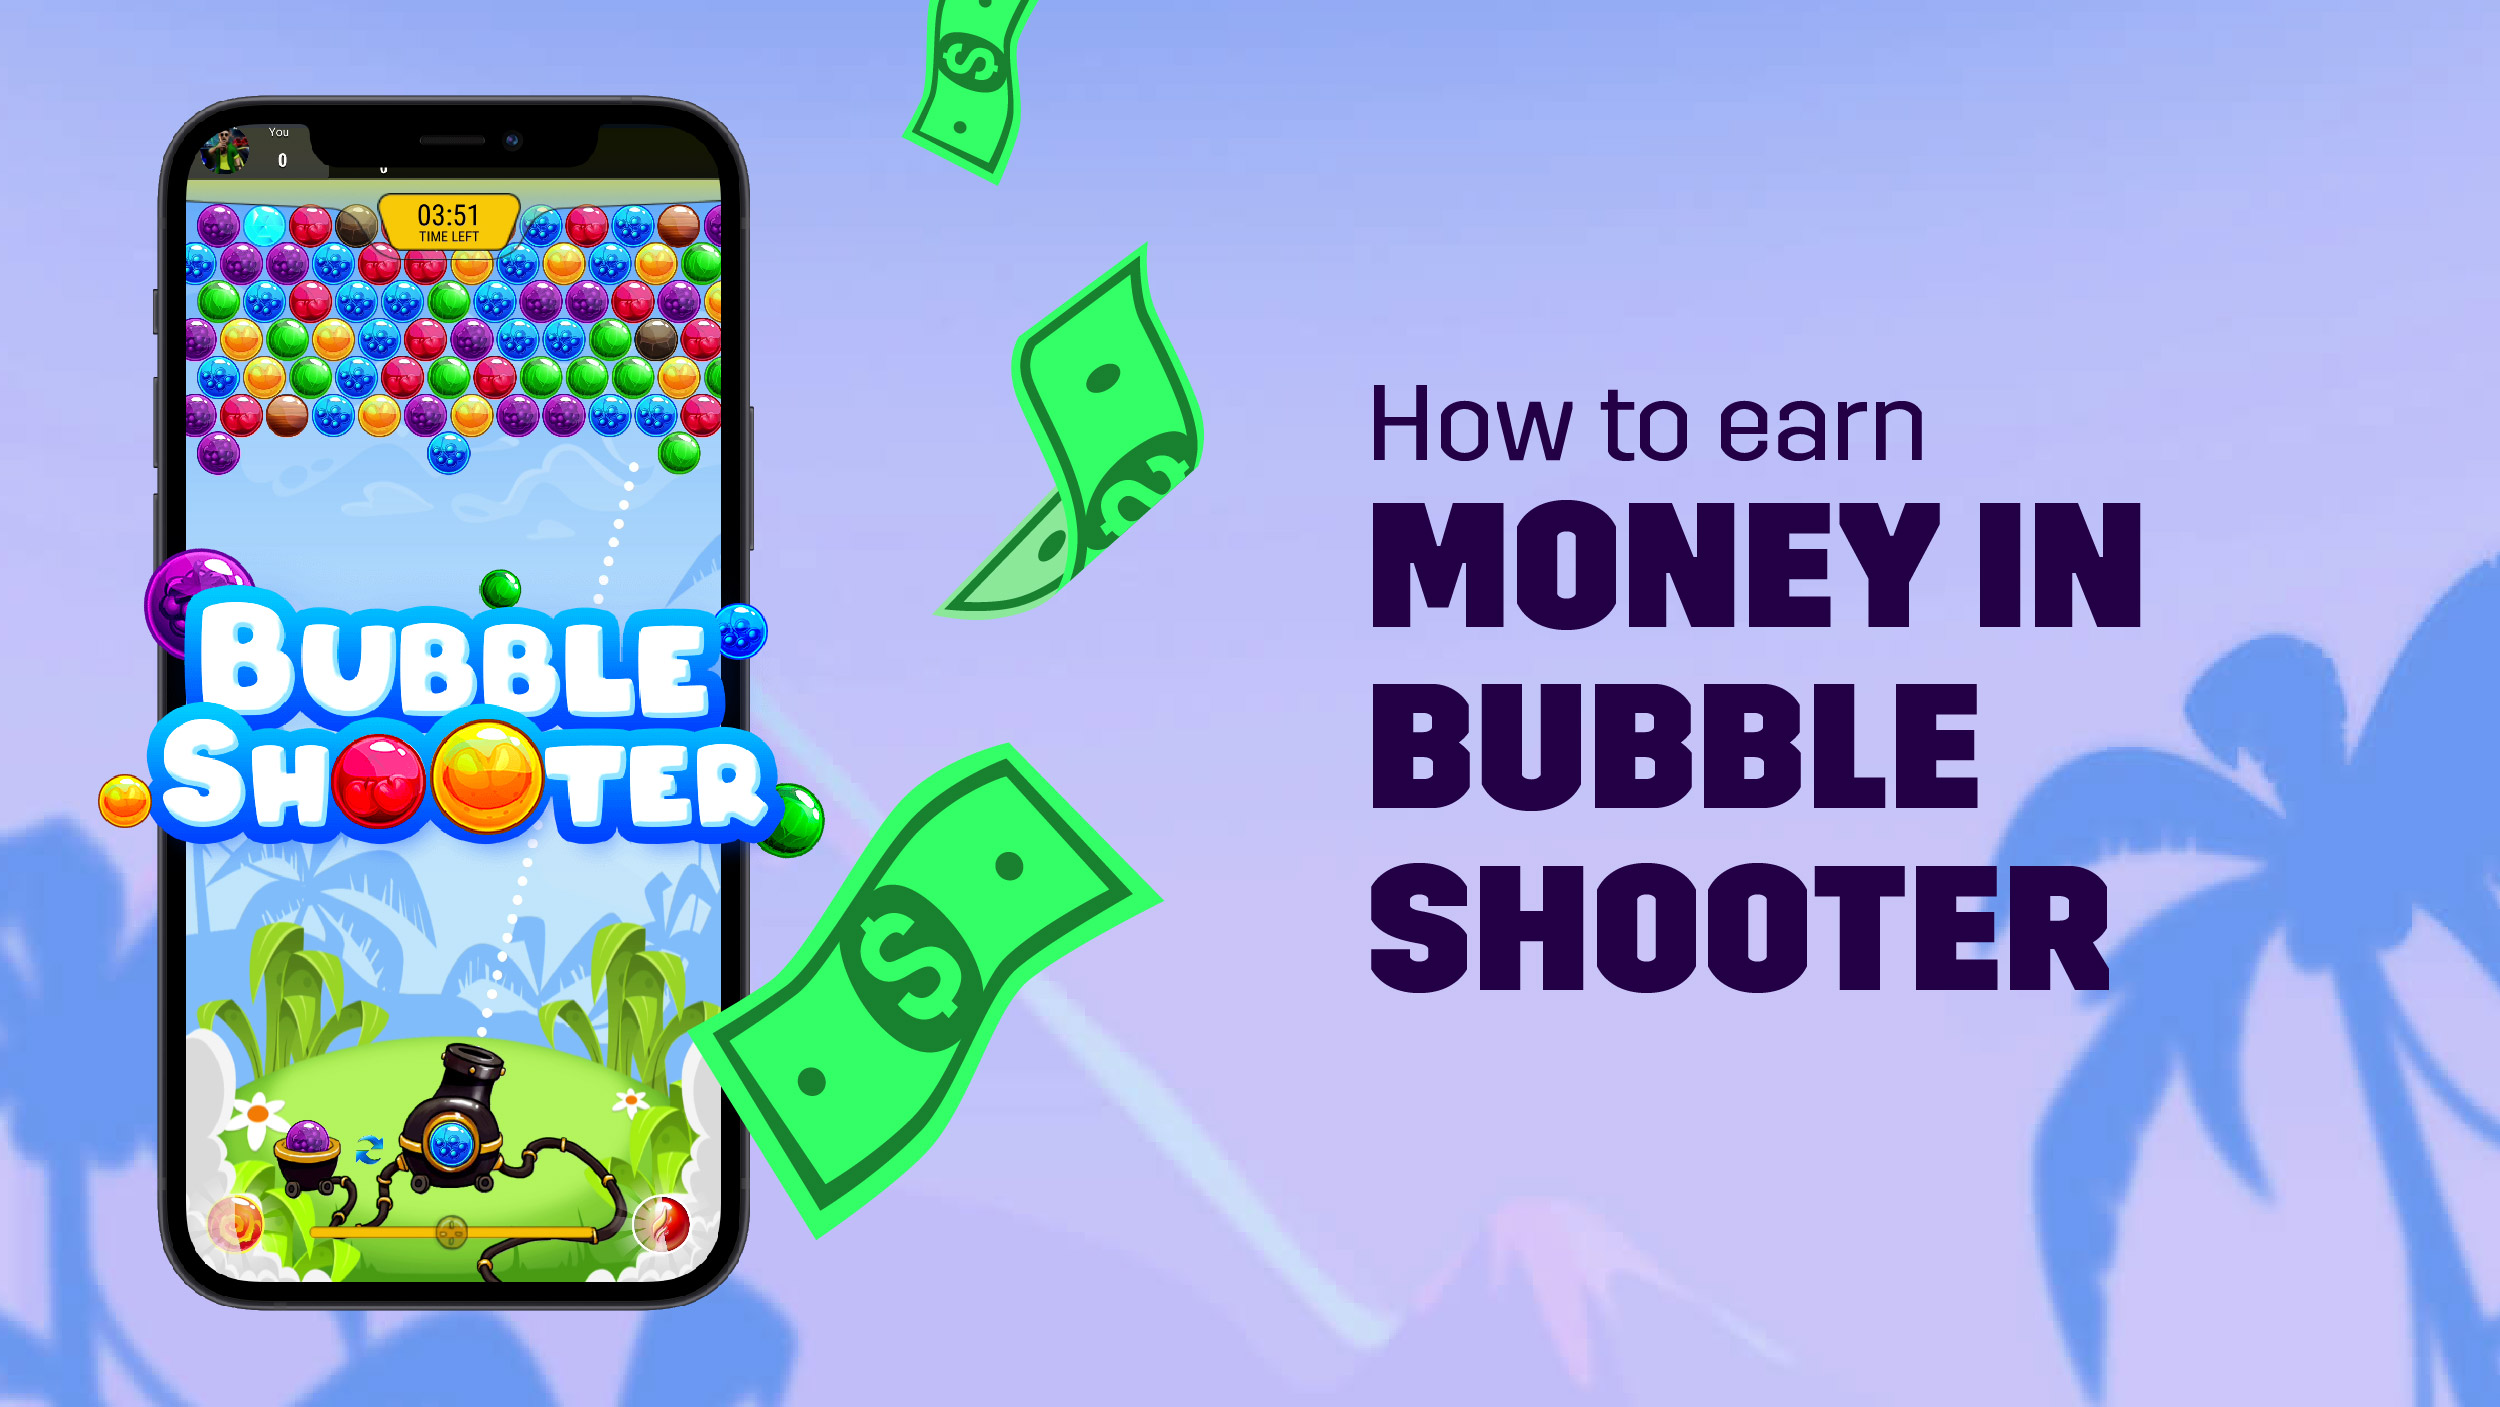 How to earn money through bubble shooter